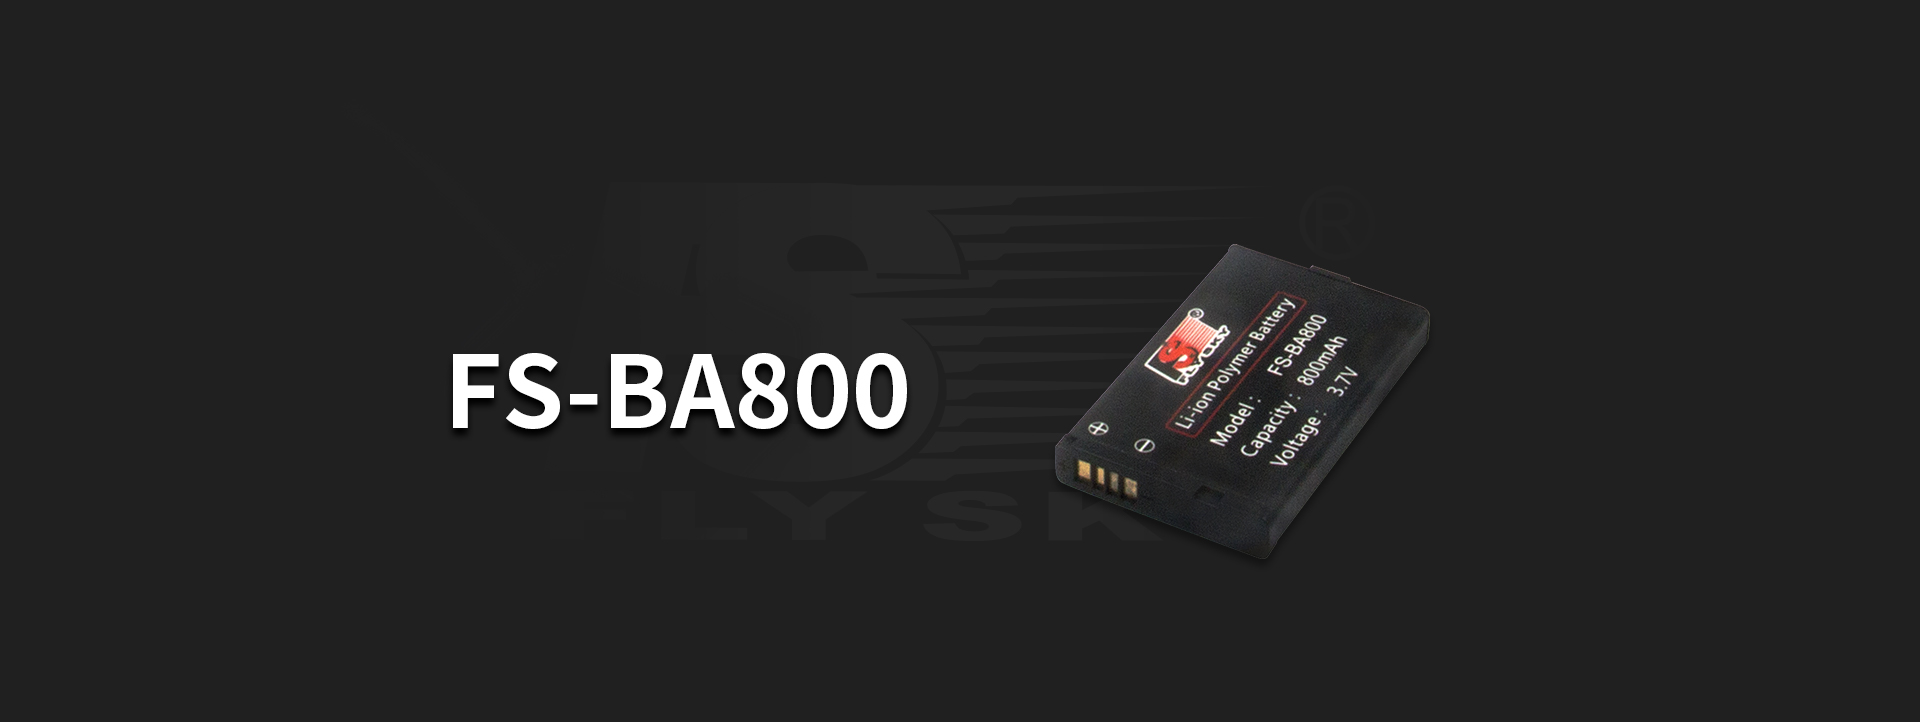 FS-BA800